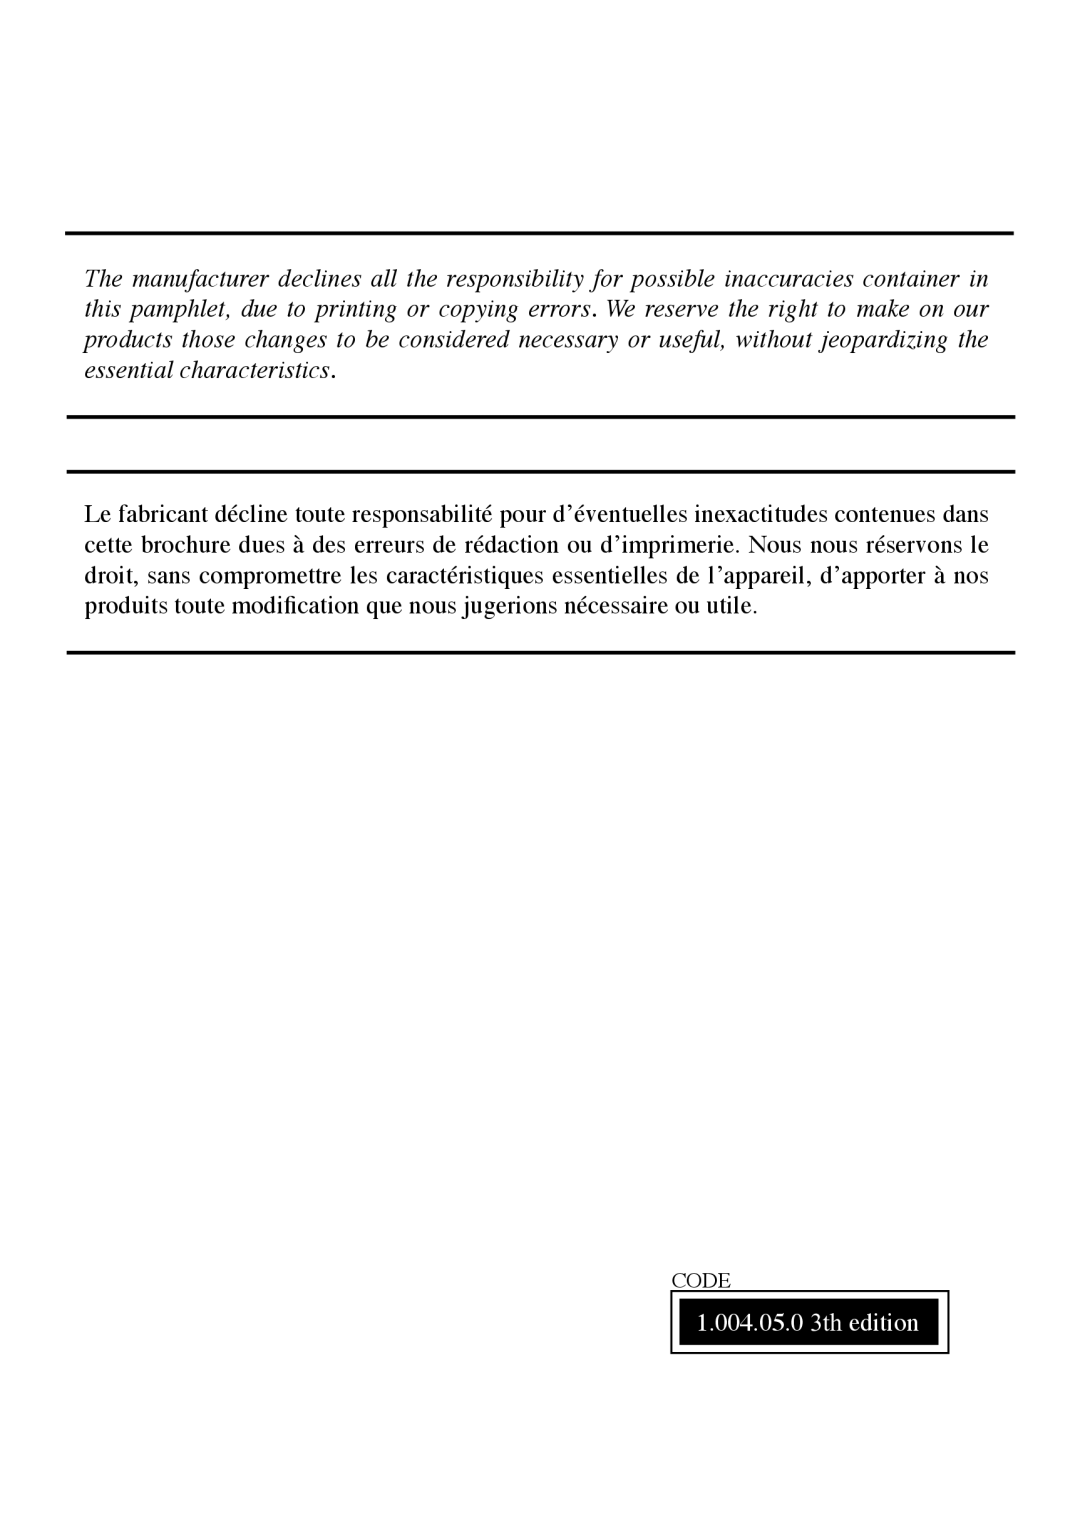 Fagor America 3FIA-95GLST X manual 1.004.05.0 3th edition, Code 